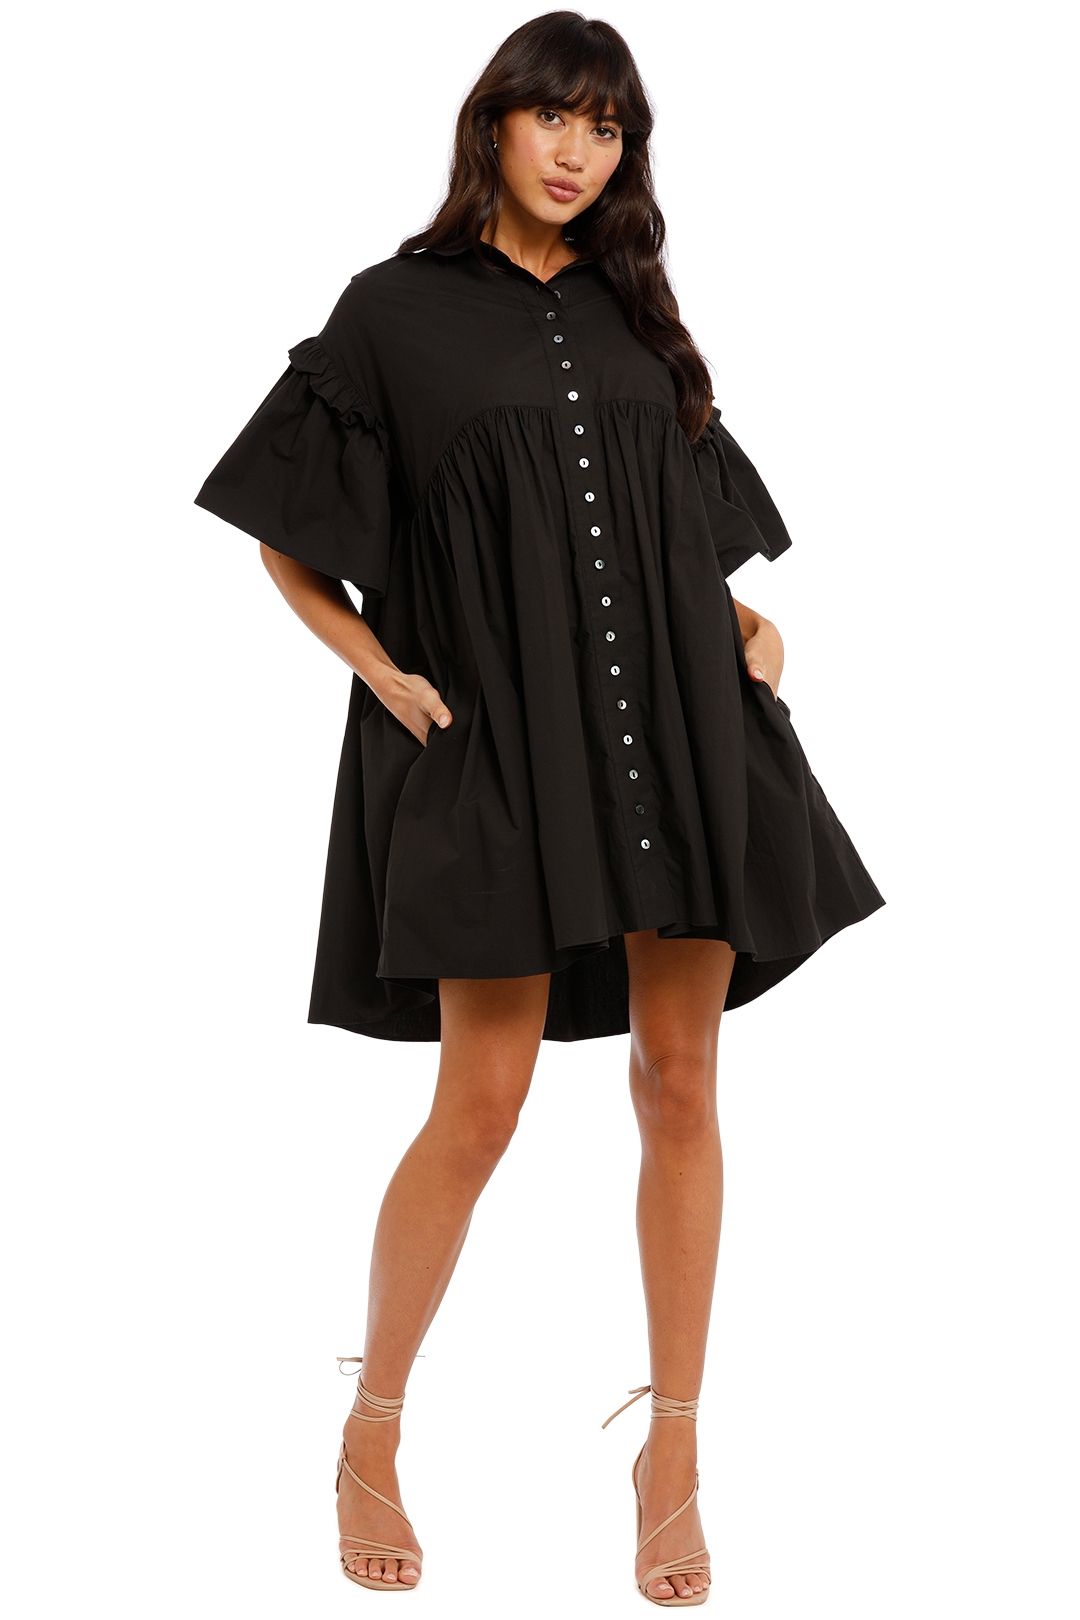 Joslin Ashleigh Smock Mini Dress Black Short Sleeve